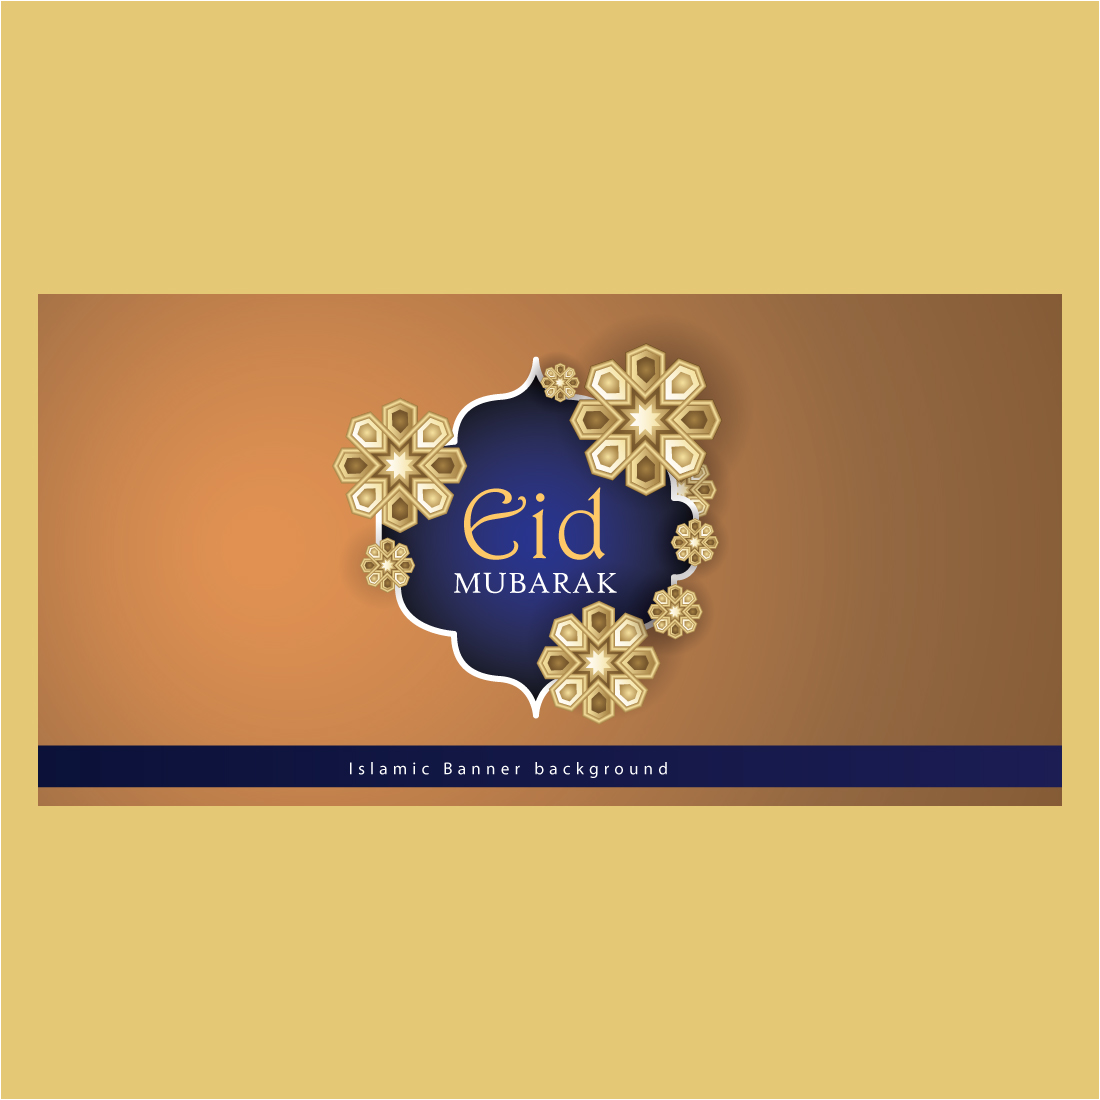 Eid mubarak greeting card with gold flowers.